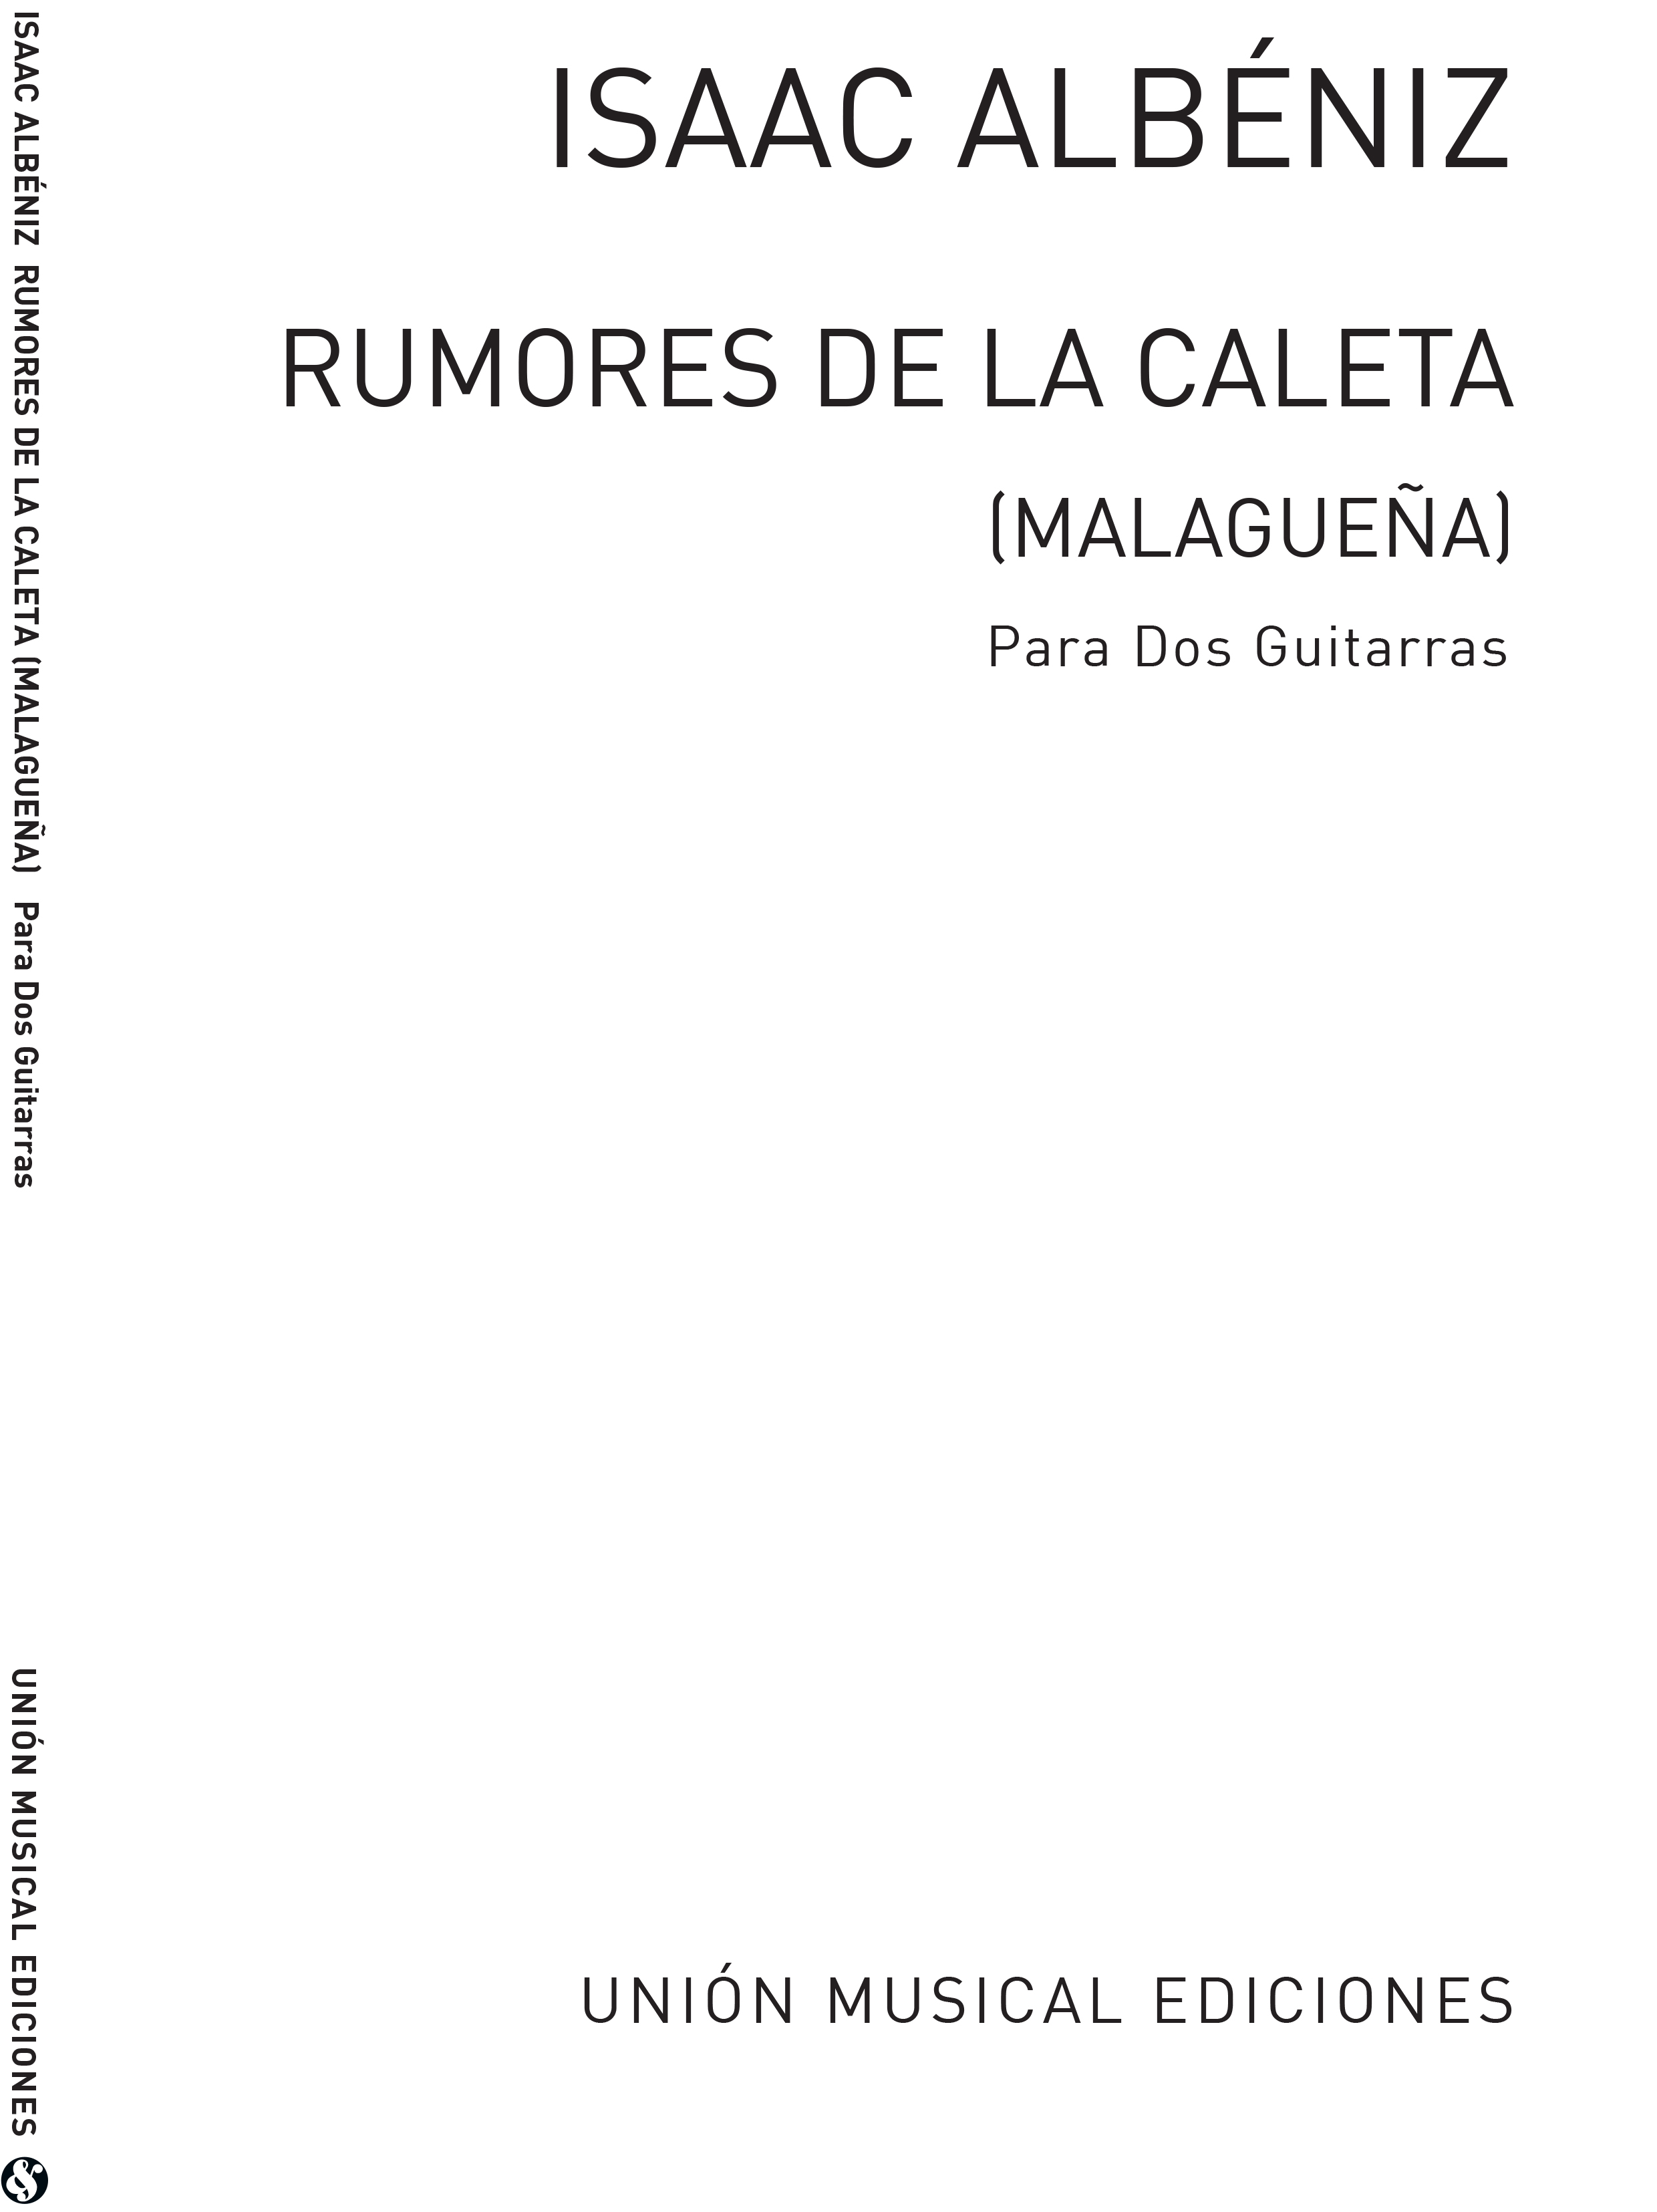 Isaac Albéniz: Albeniz Rumores De La Caleta Malaguena 2 Guitars: Guitar: